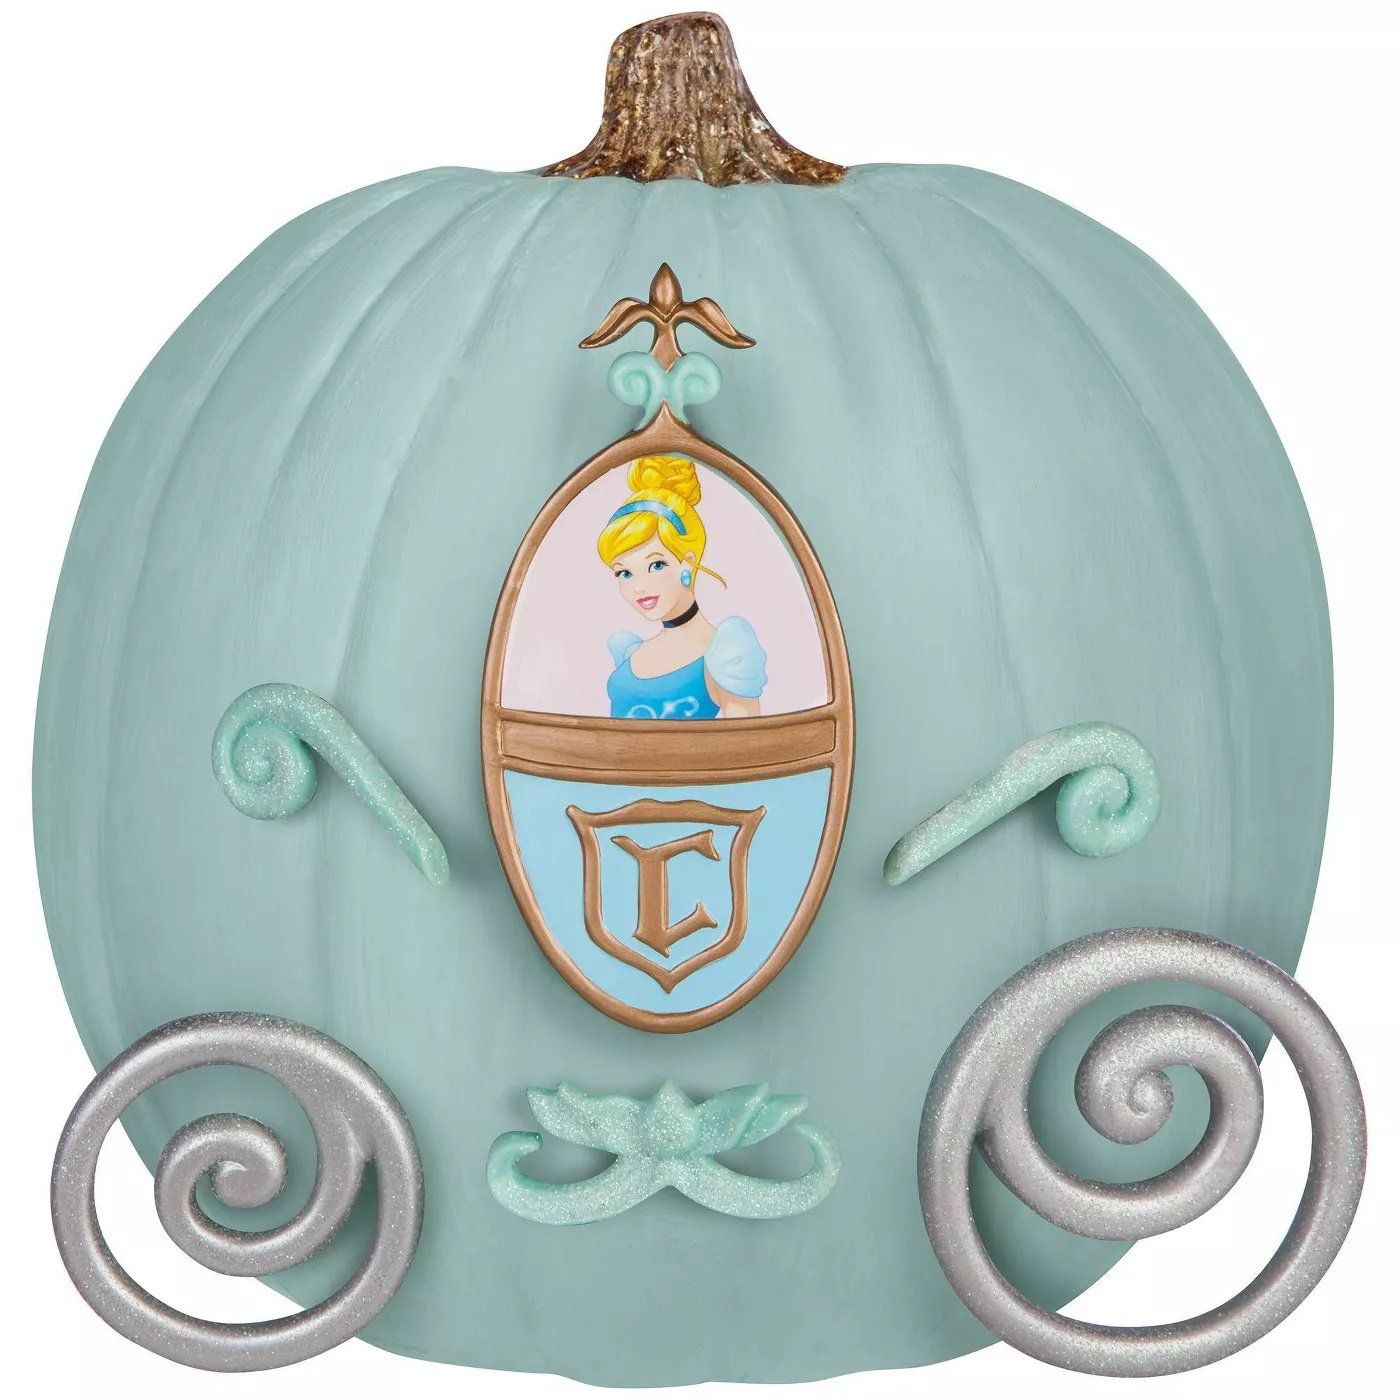 Target Is Selling Adorable No-Carve Disney Pumpkin Decorating Kits